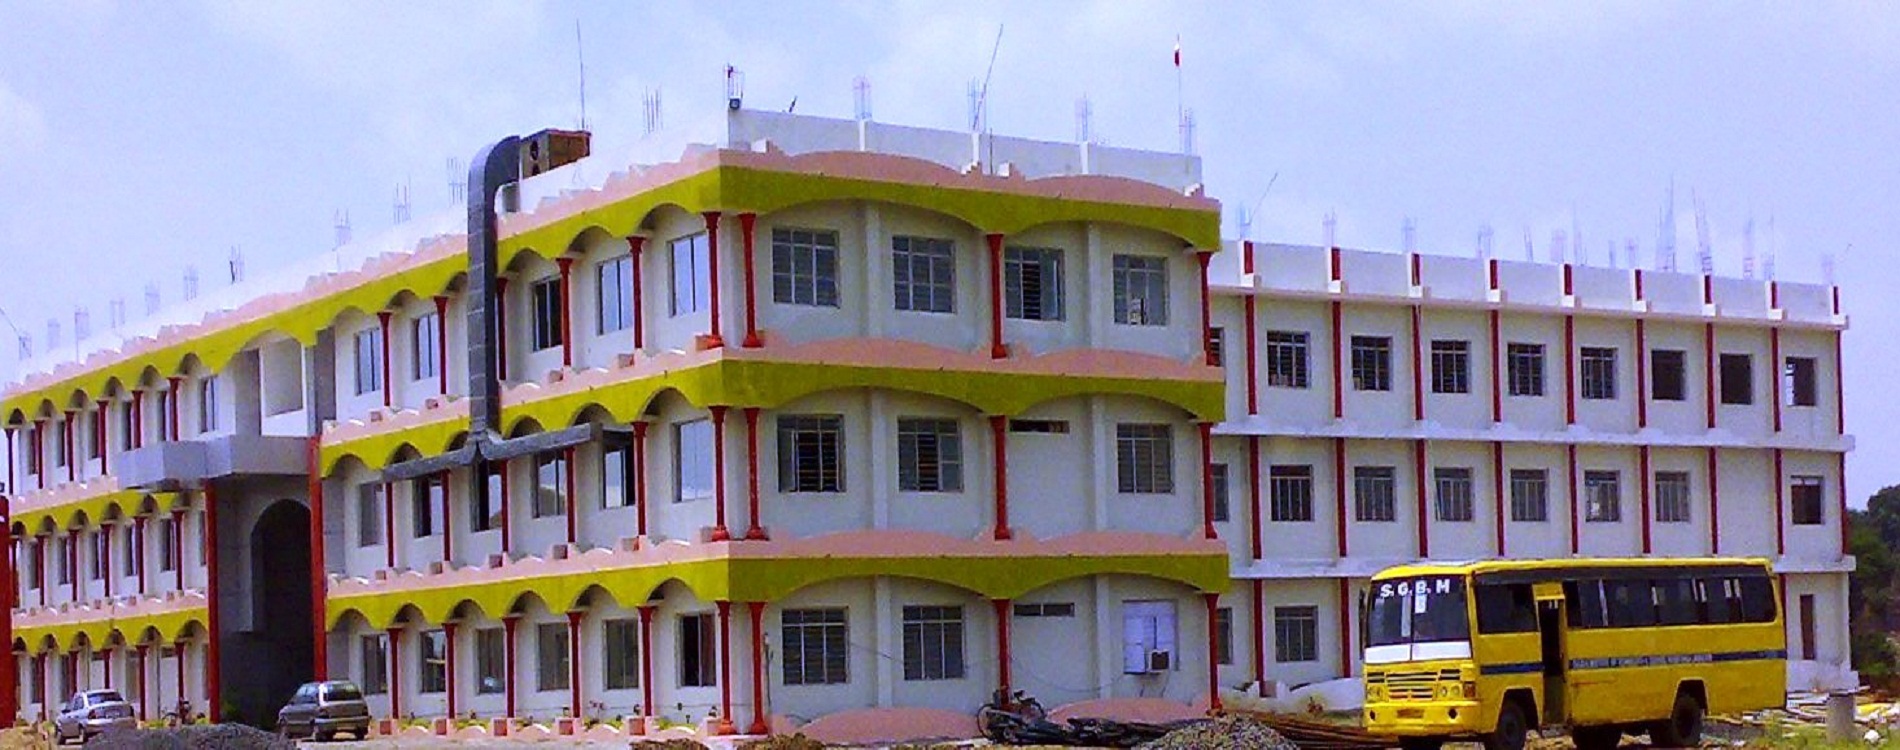 SGBM Instiute Of Science And Technology, Jabalpur Image